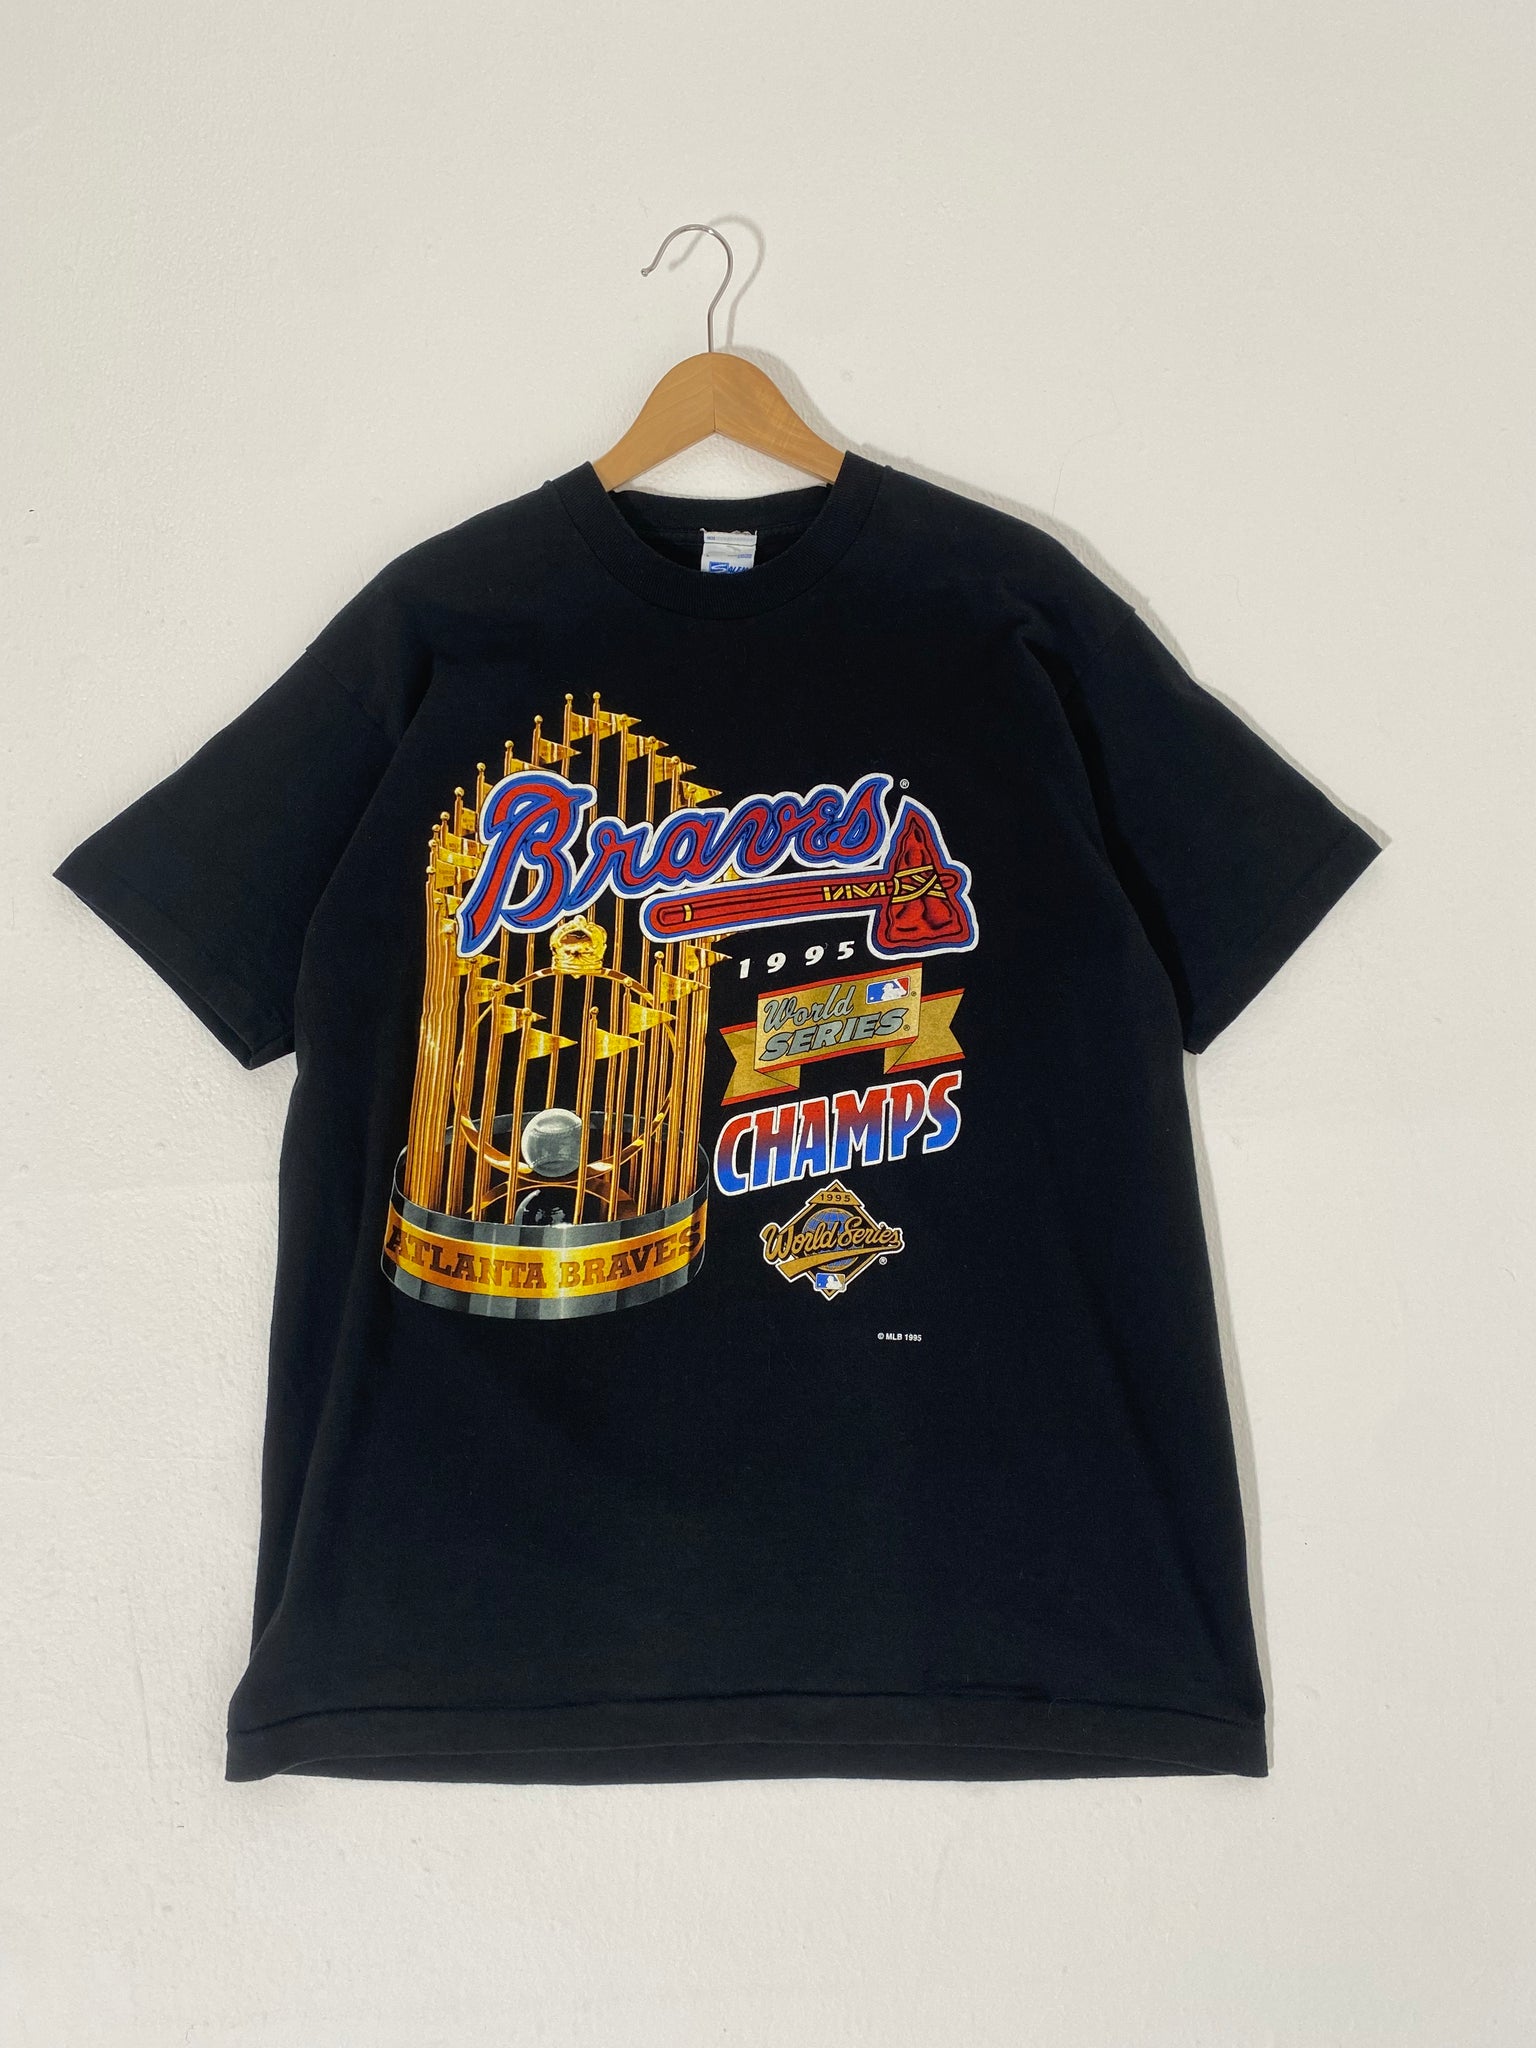 Vintage Atlanta Braves Sweatshirt Size X-Small